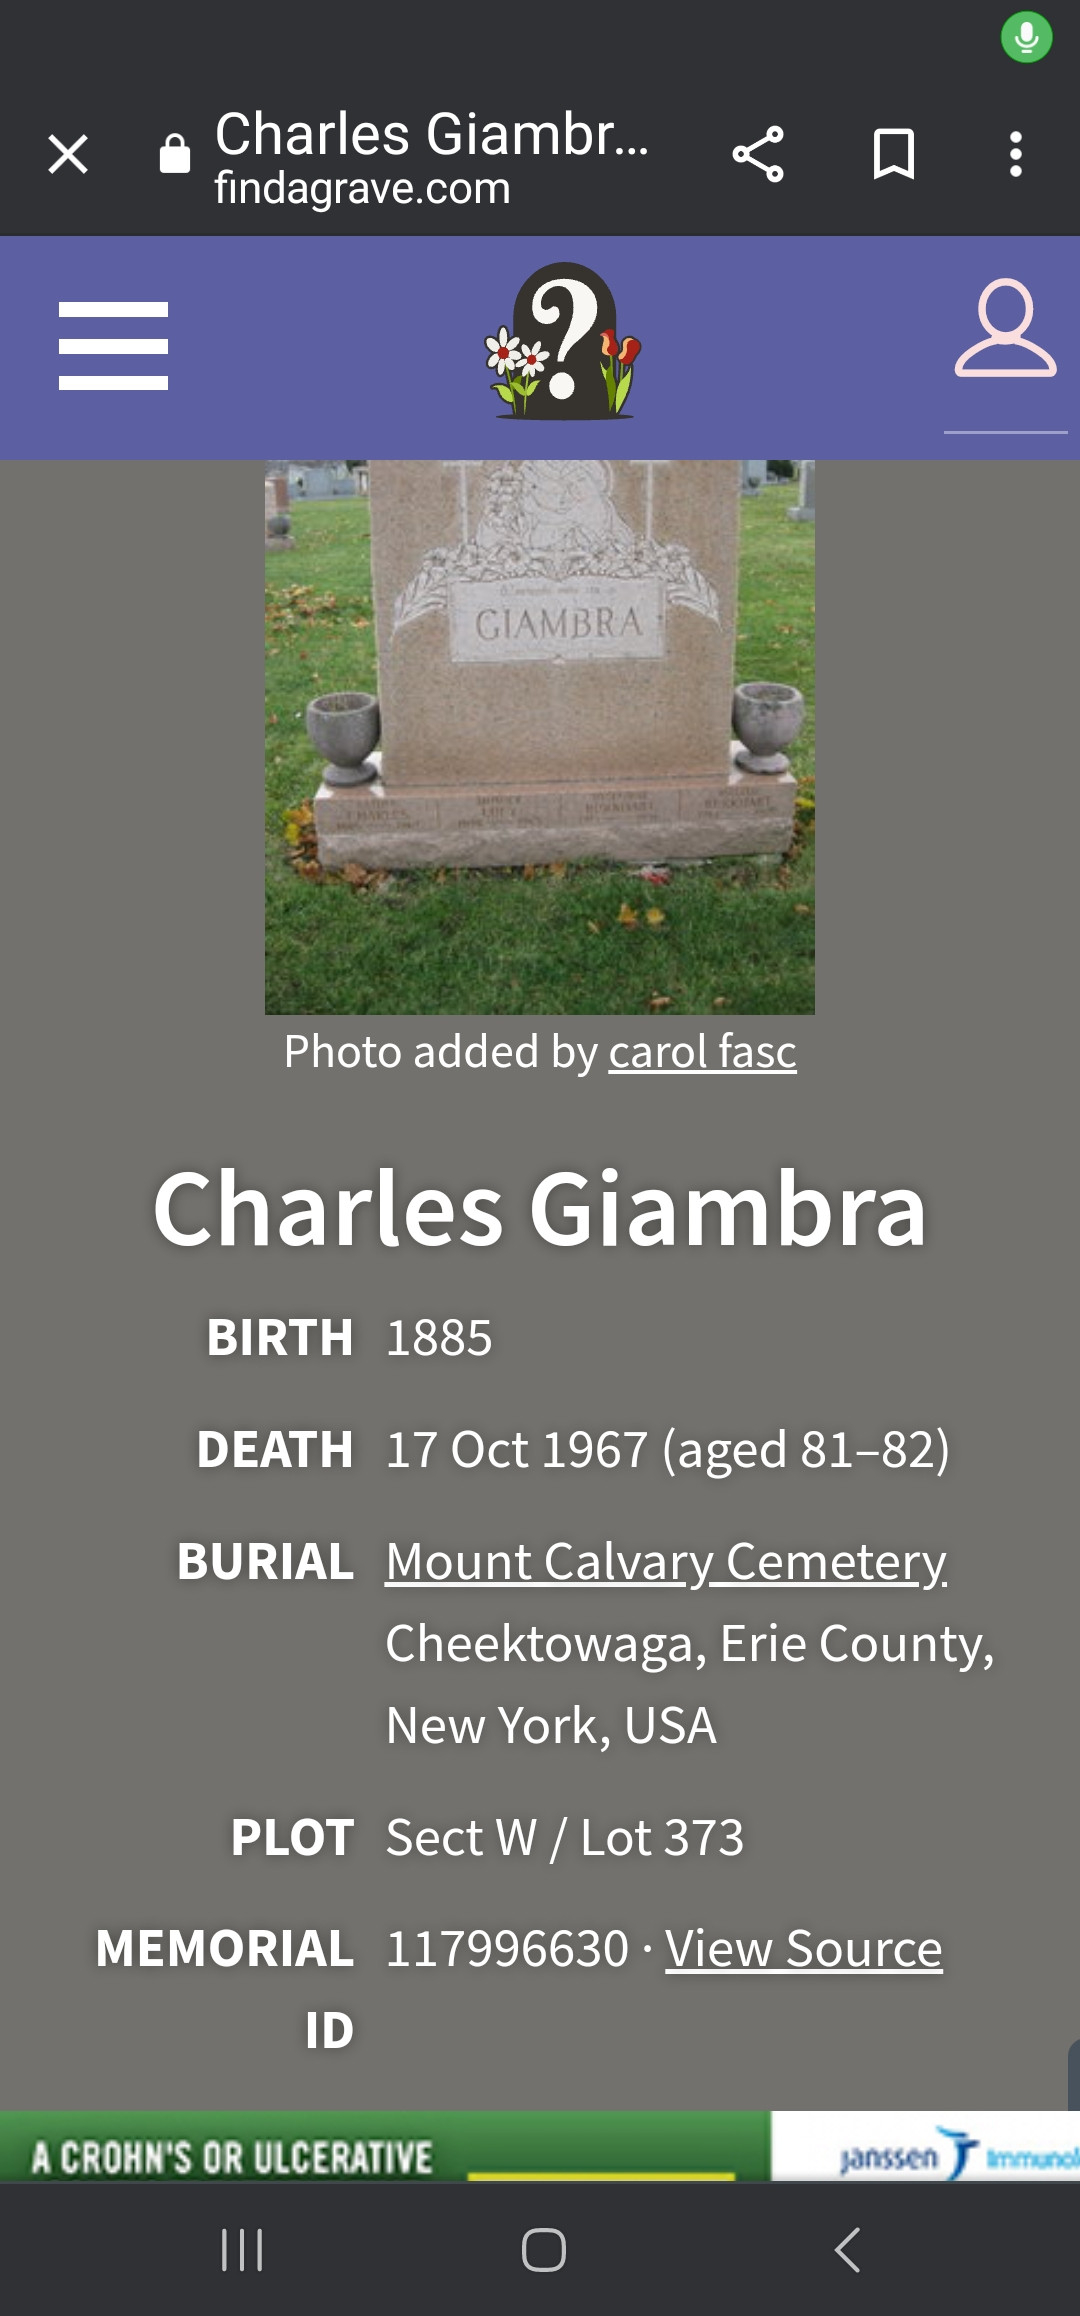 Charles Giambra